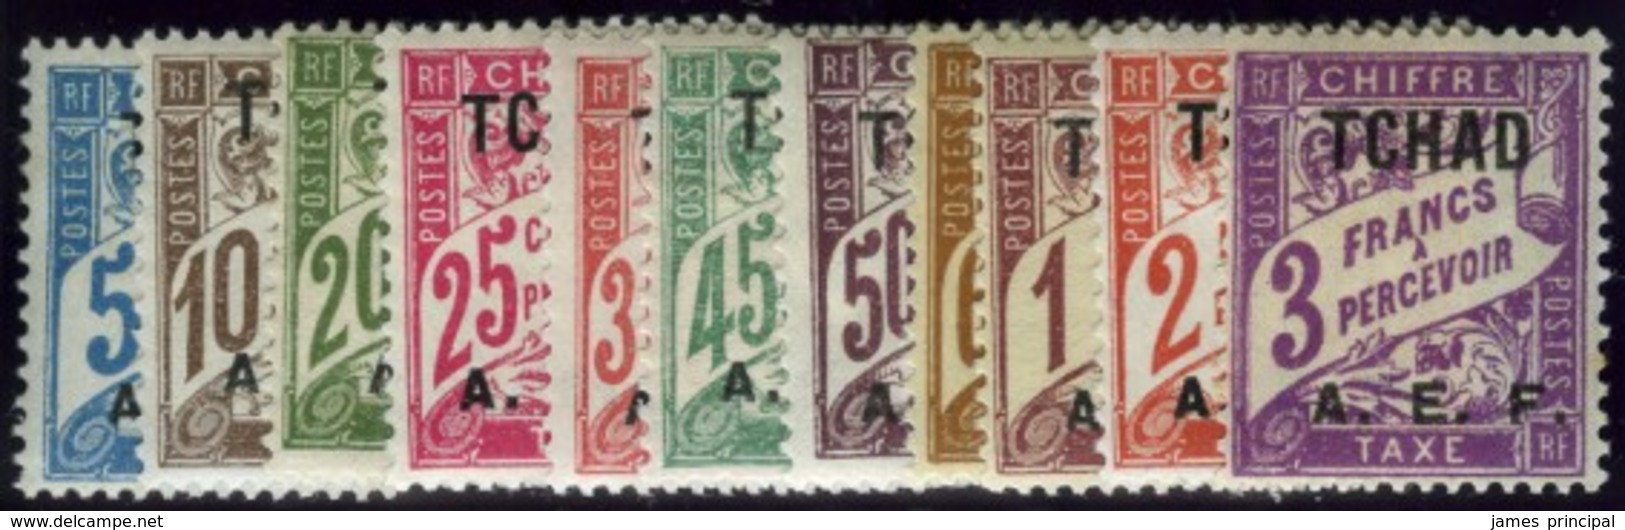 Chad. Sc #J1-J11. Postage Due. Mint. VF. - Unused Stamps